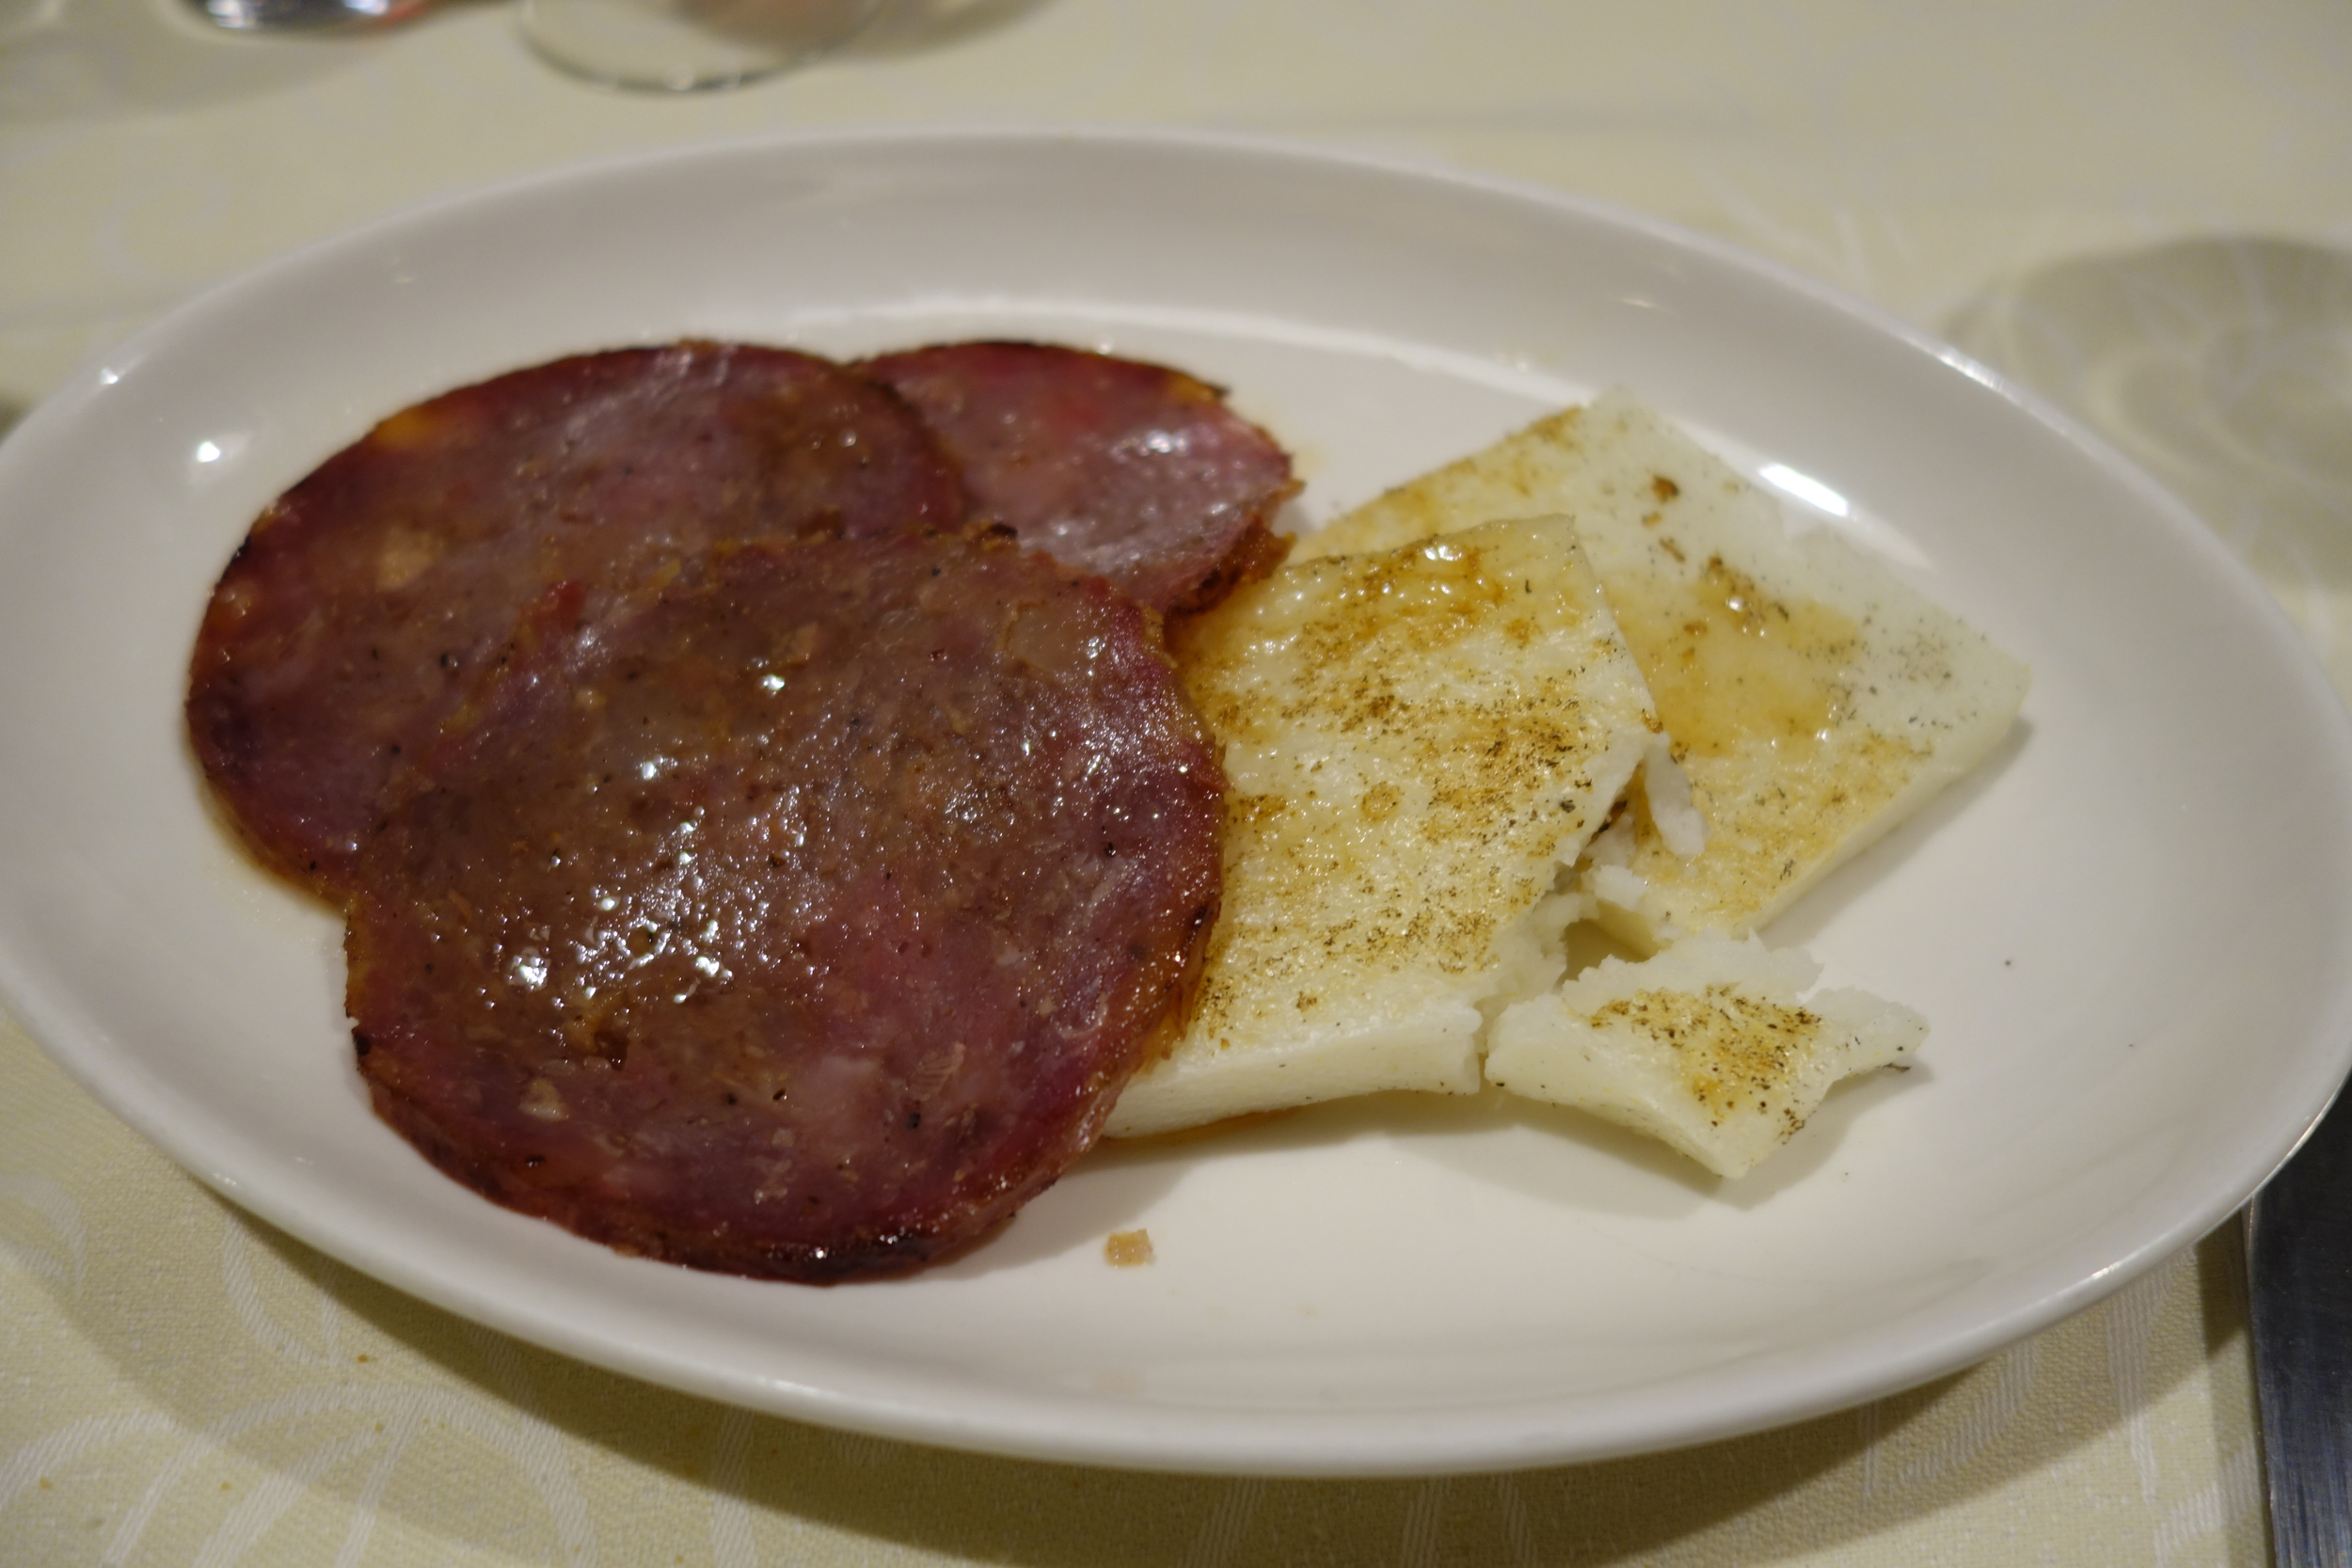  Sopressa plate at Trattoria alla Cerva. They had an impressively vegetarian-friendly menu as well. 